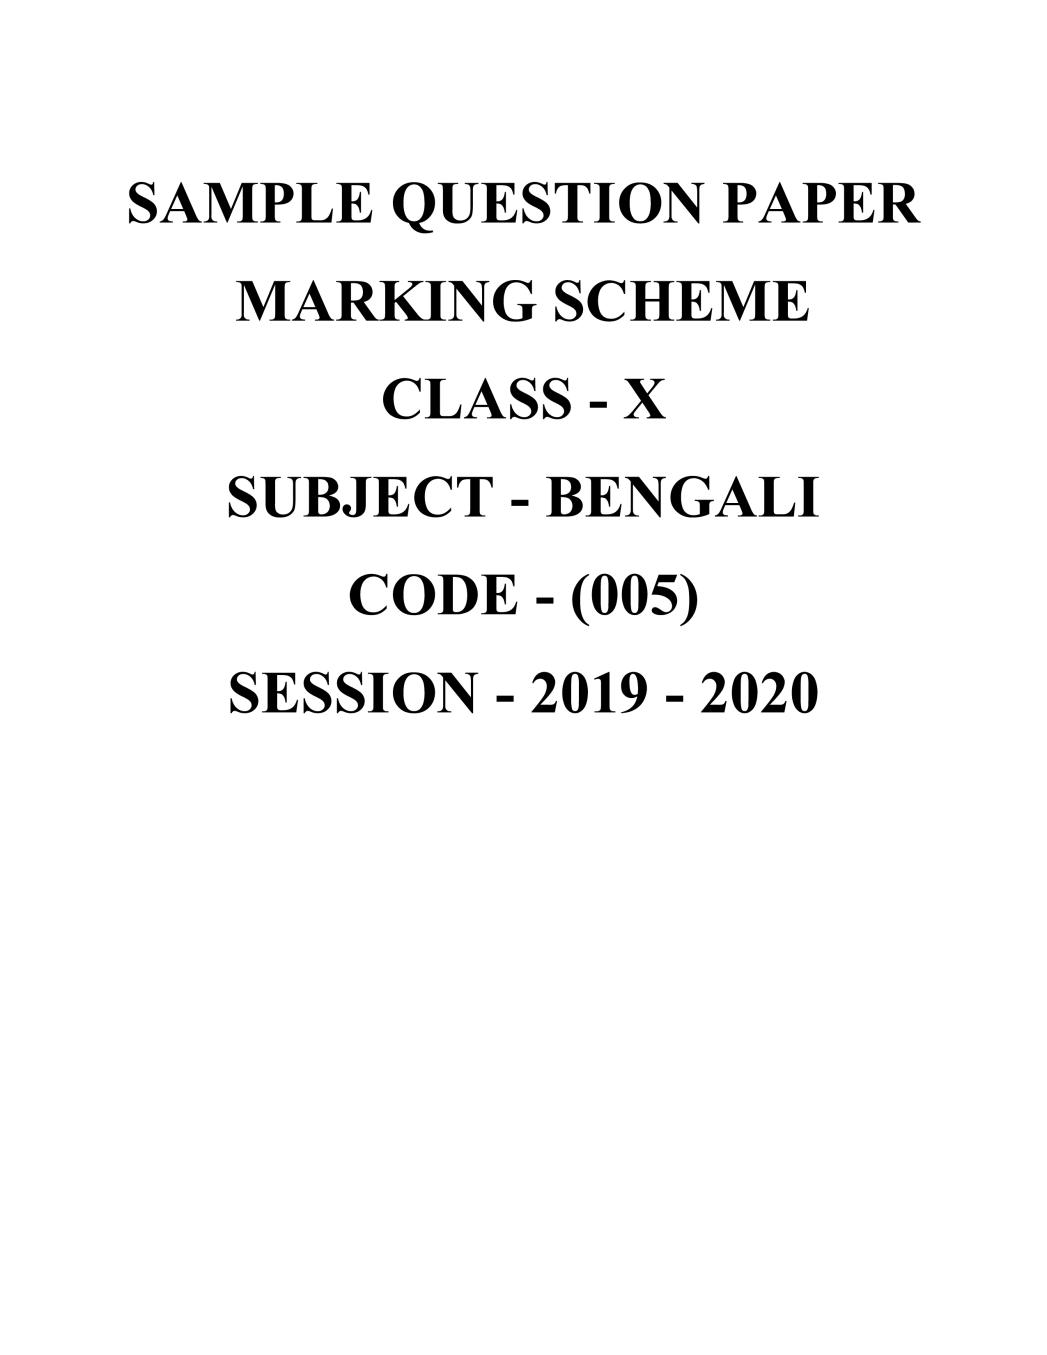 CBSE Class 10 Marking Scheme 2020 for Bengali - Page 1